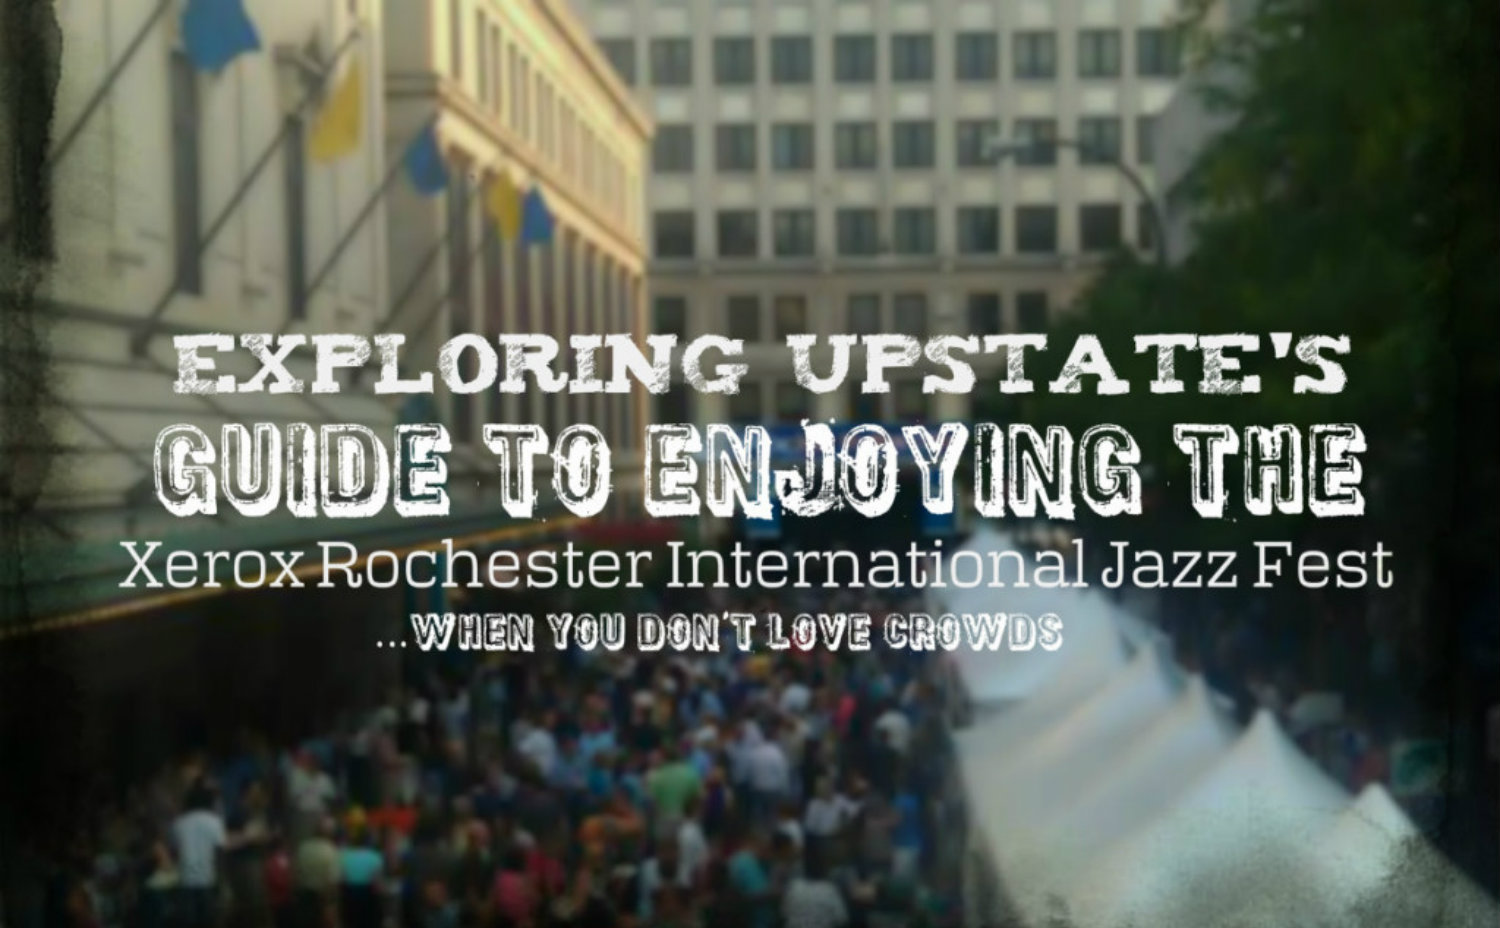 Rochester International Jazz Fest 2015 Guide - Featured Image